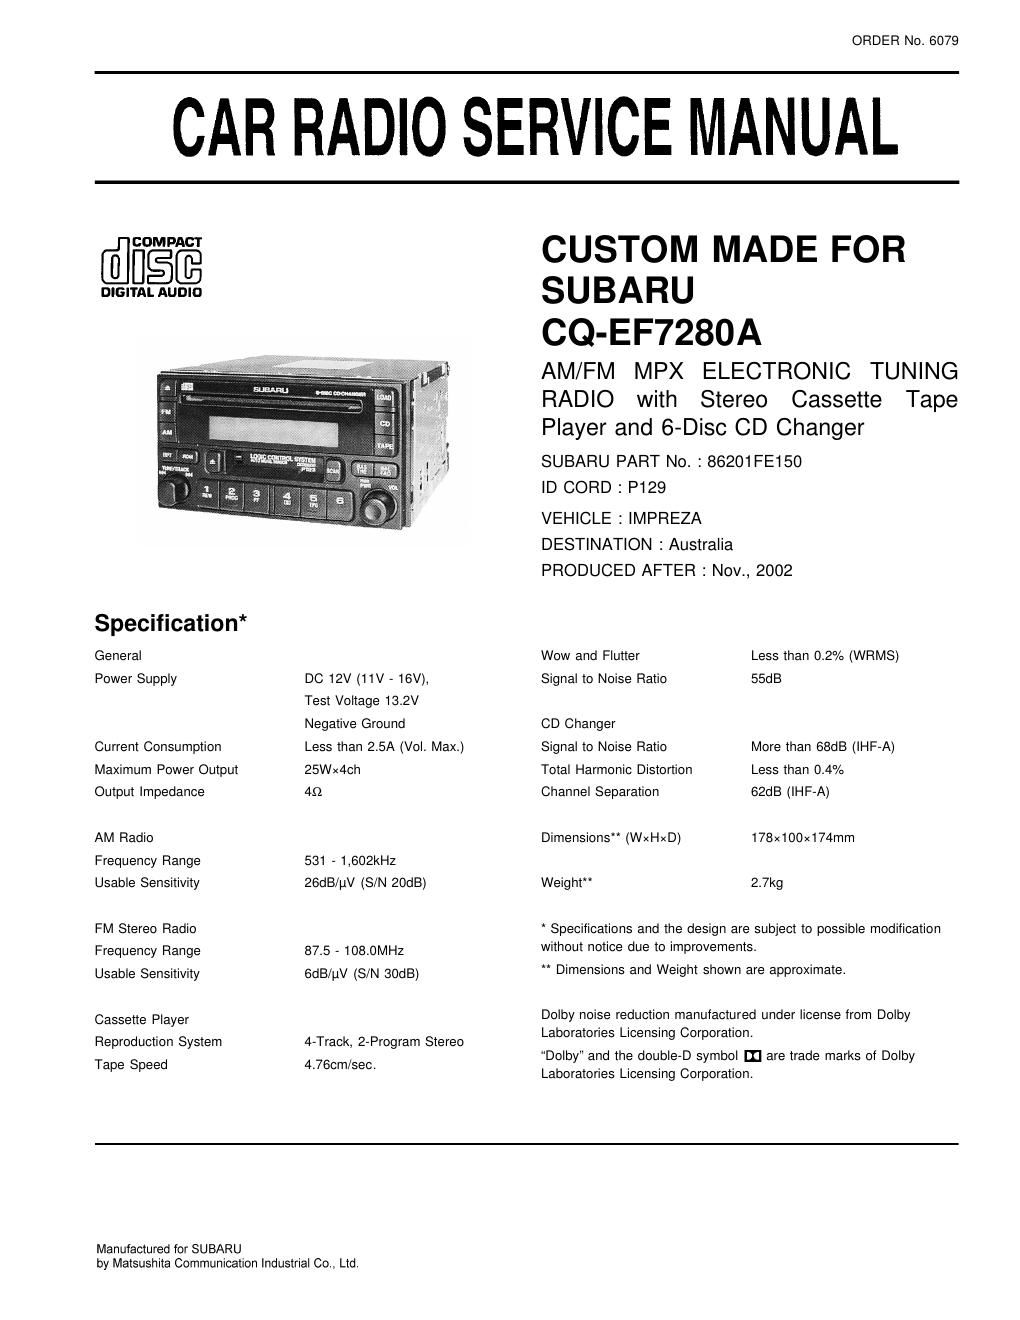 panasonic cq ef 7280 a service manual